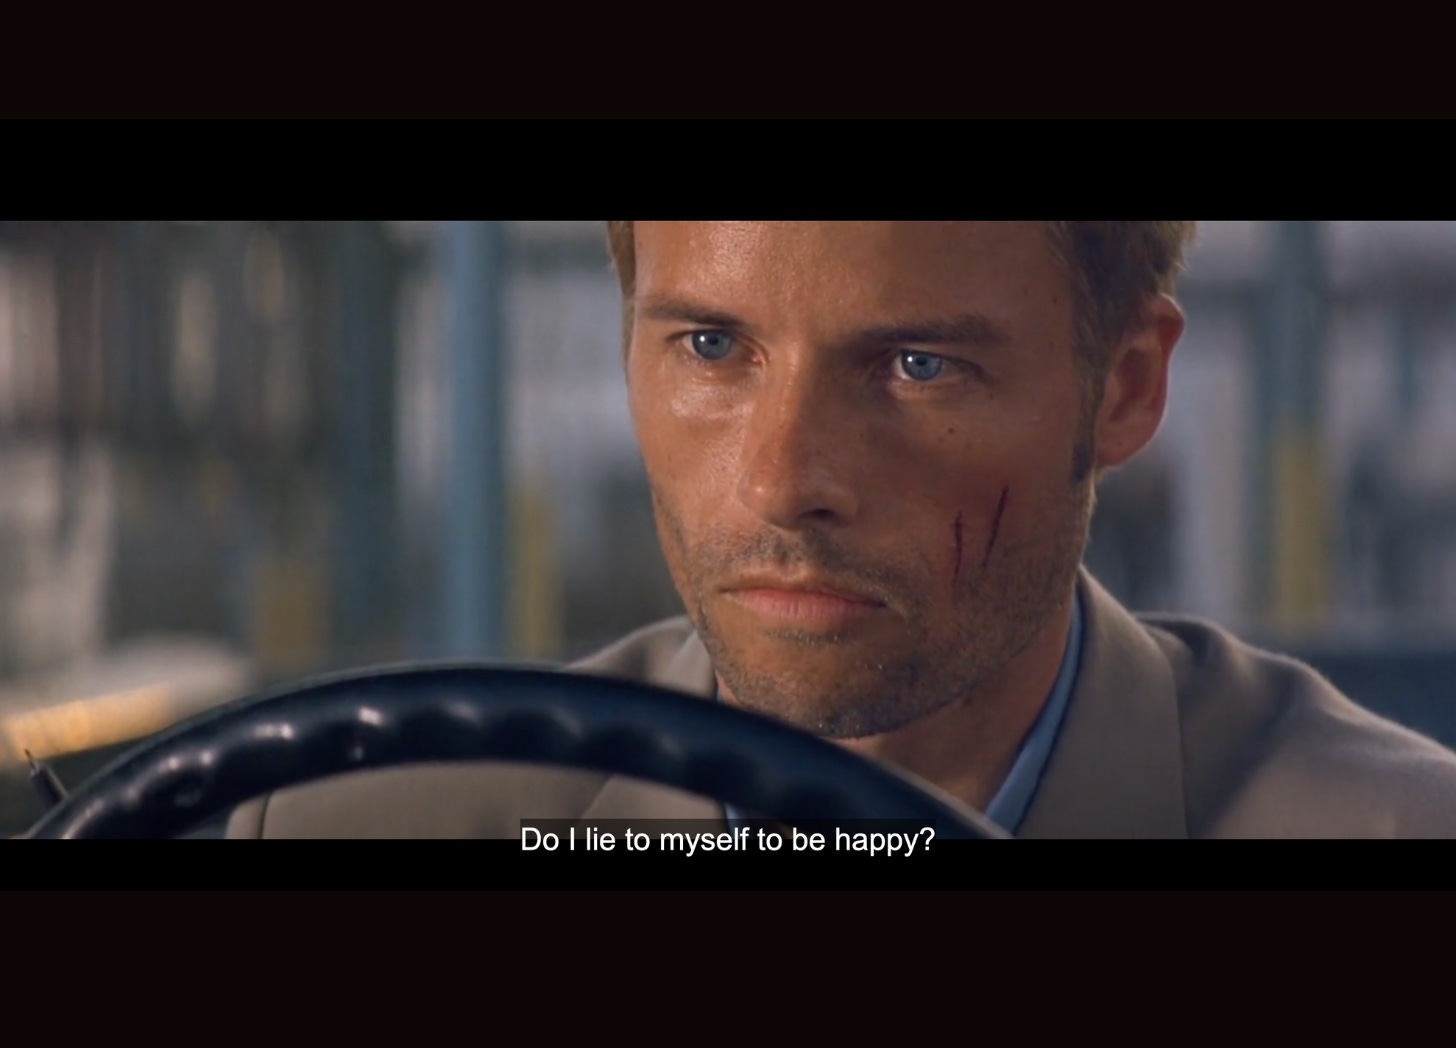 Memento scene with Leonard asking: "Do I lie to myself to be happy?"